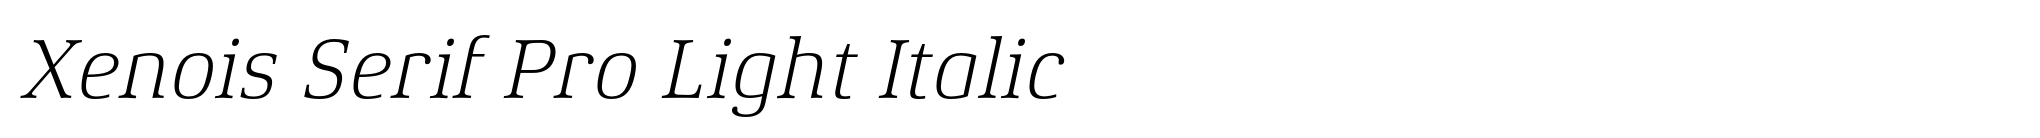 Xenois Serif Pro Light Italic image